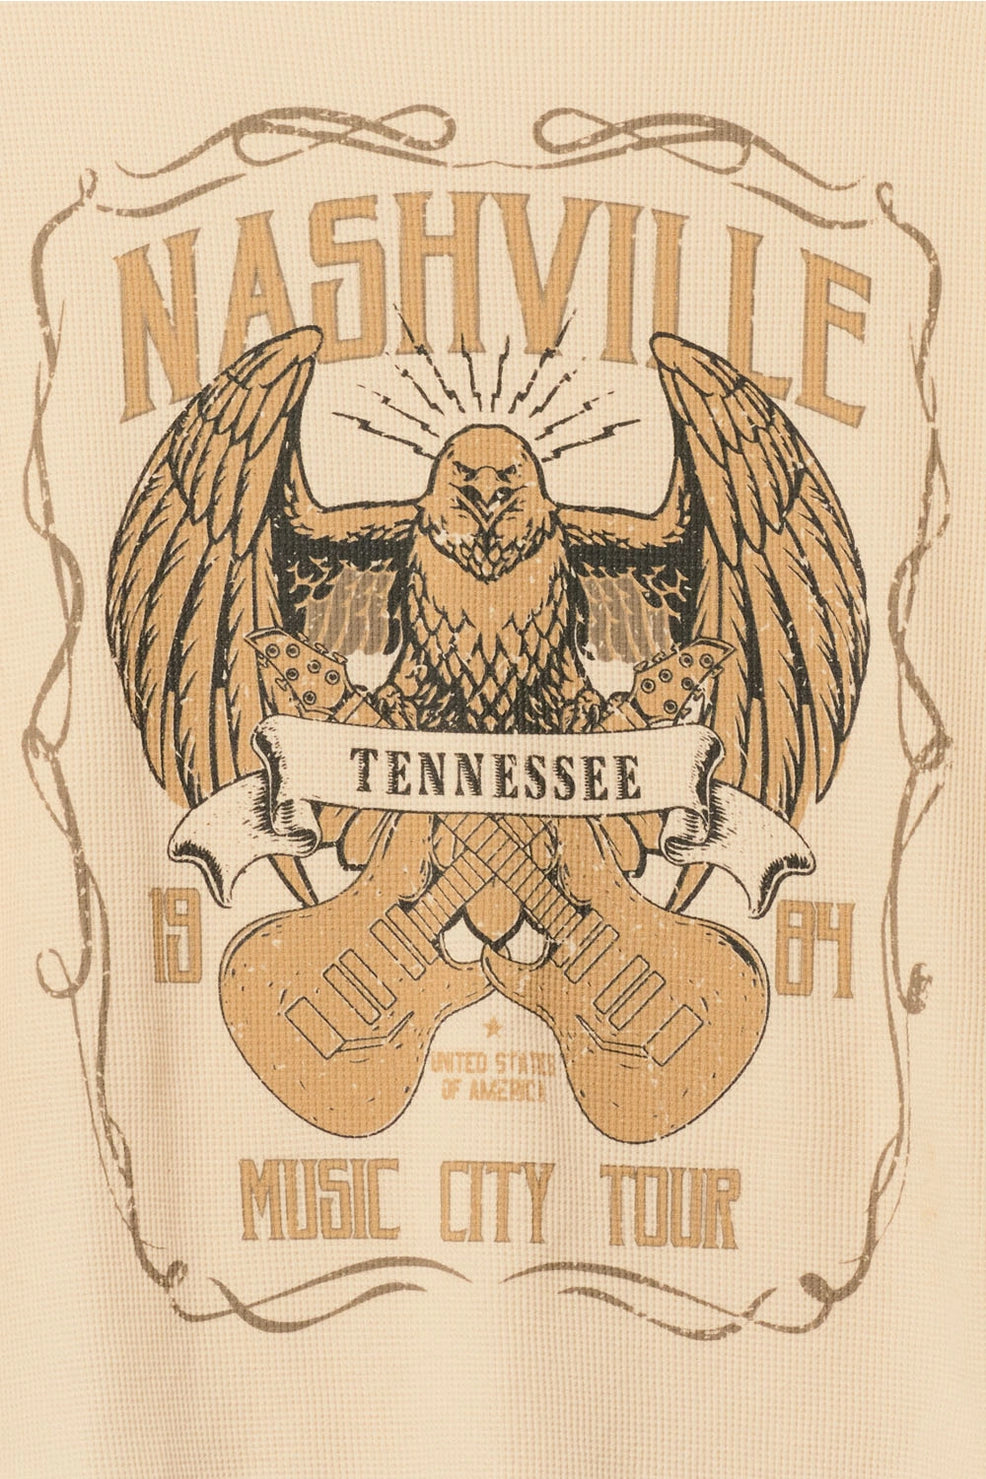 Nashville Music City Tour Waffle Knit Graphic Top